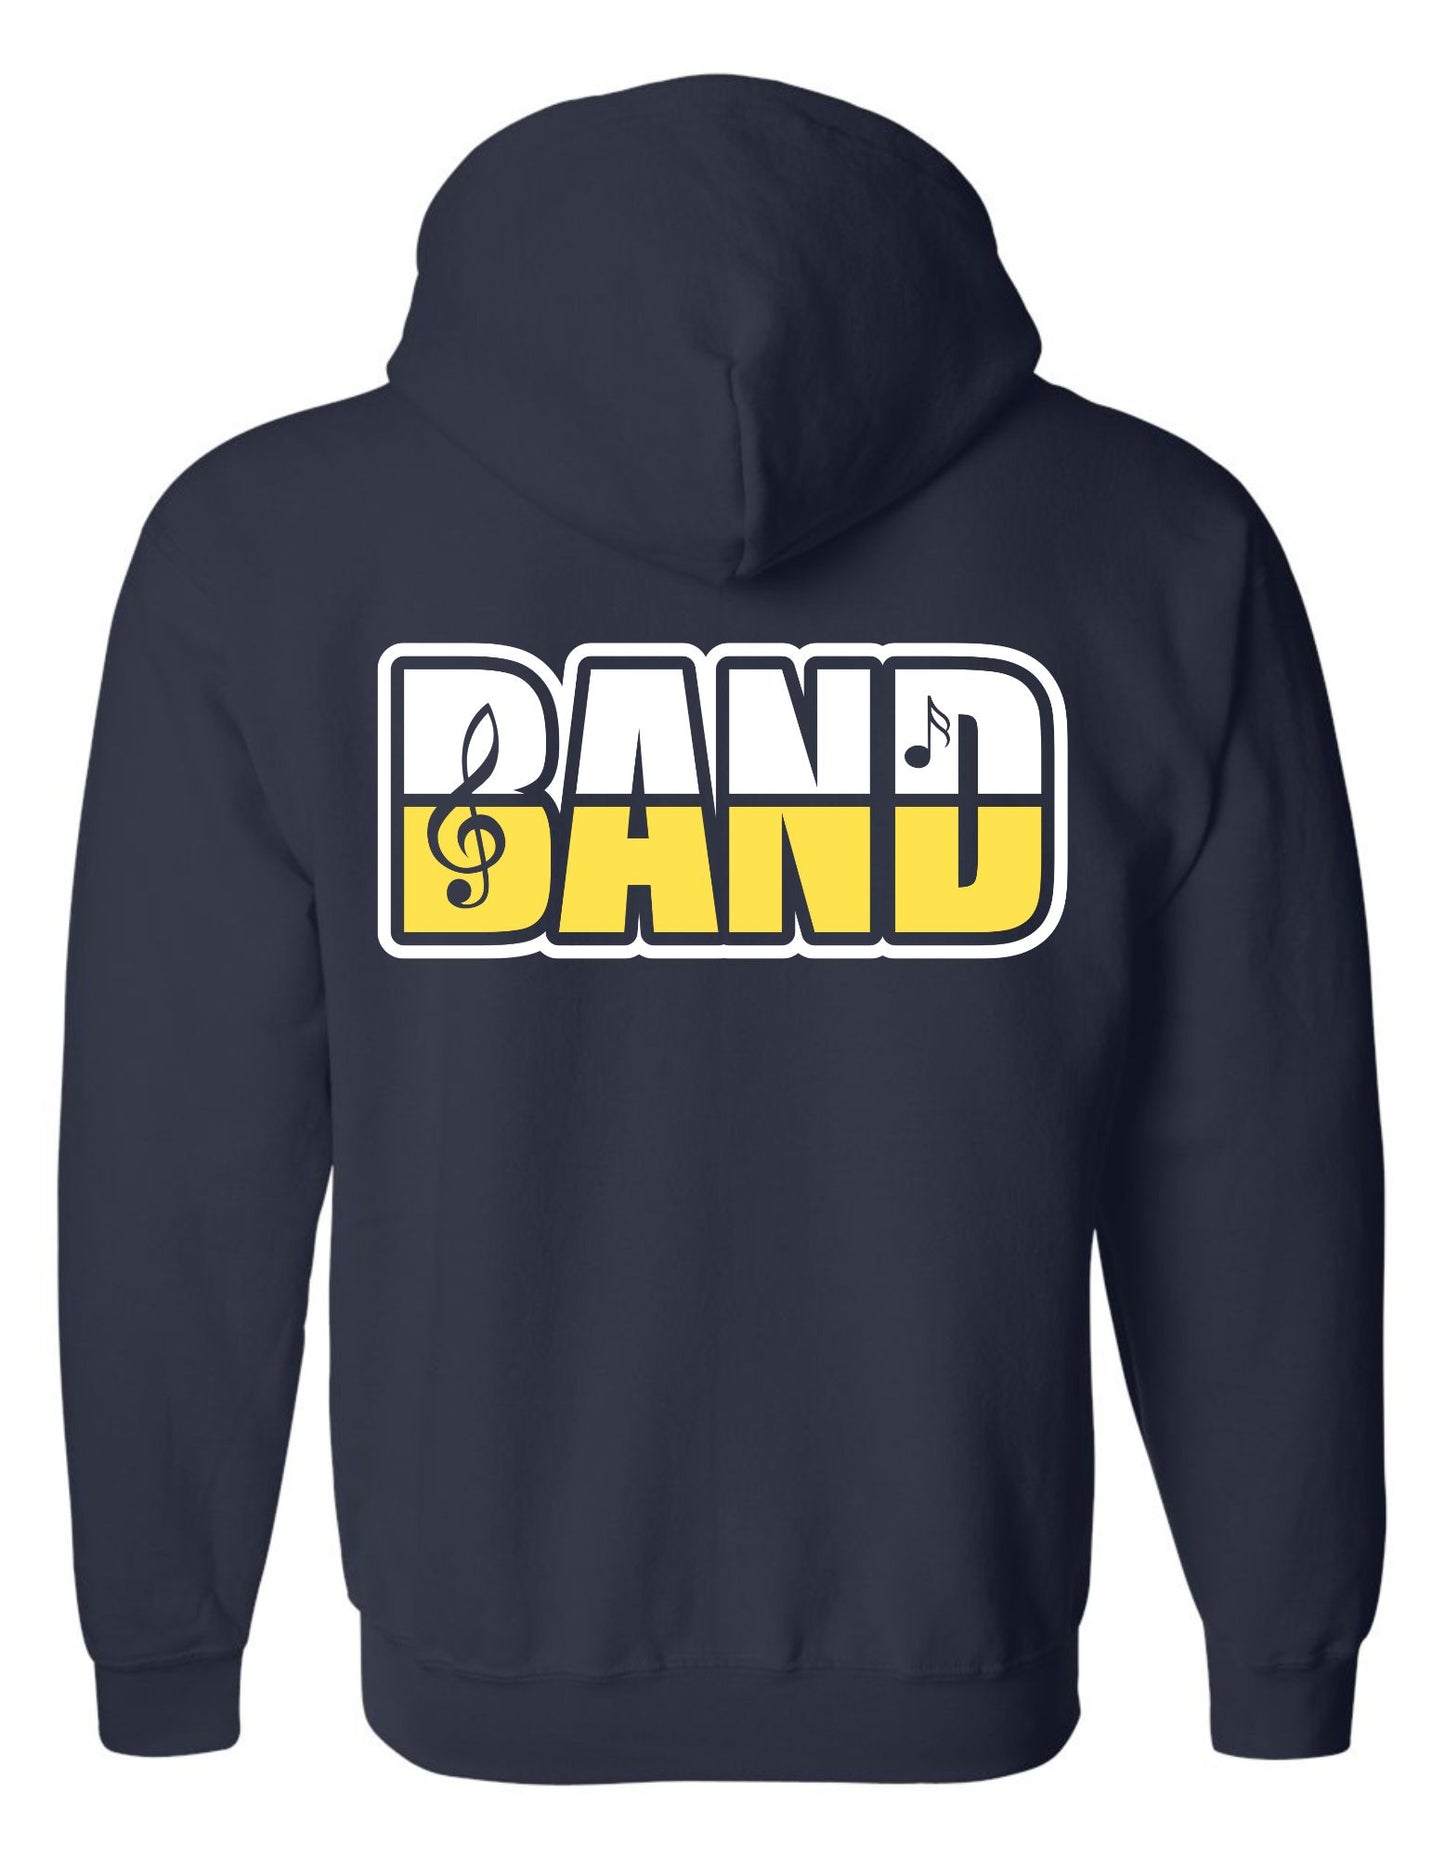 BAND Full-Zip Hooded Sweatshirt - MariROsa Craft Shop